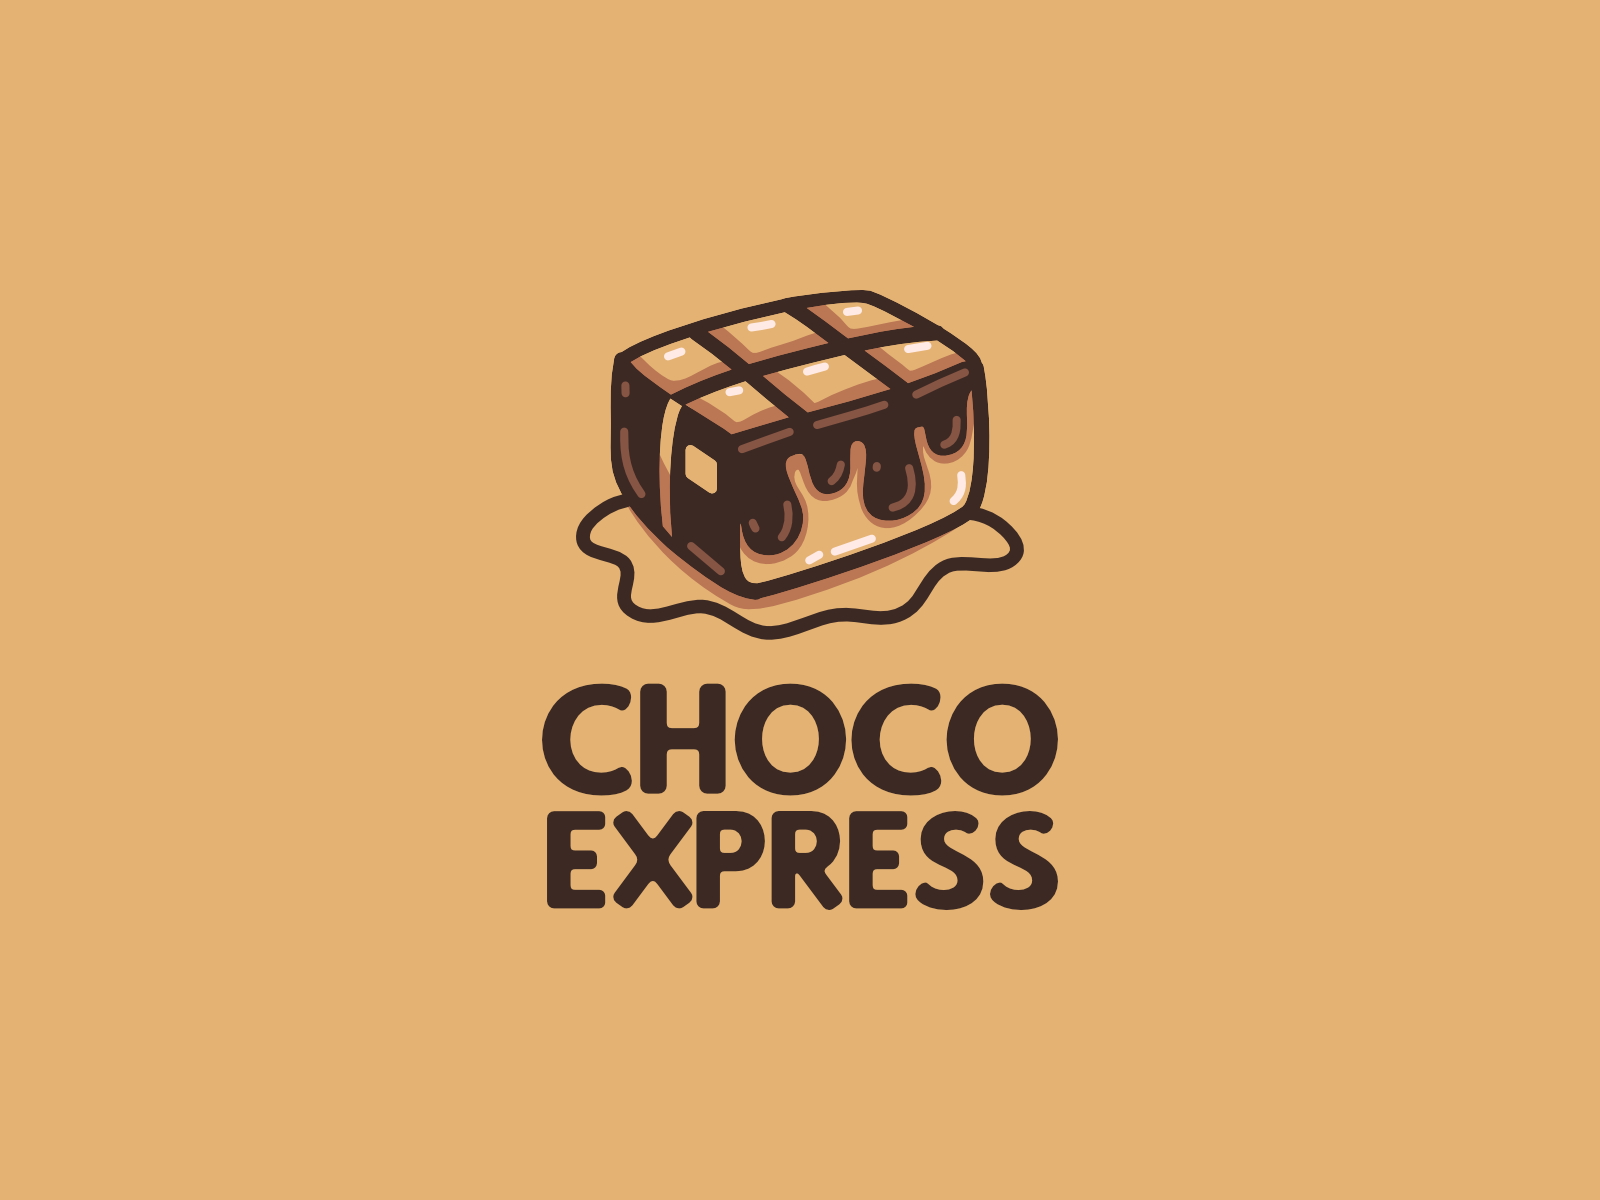 Choco Express